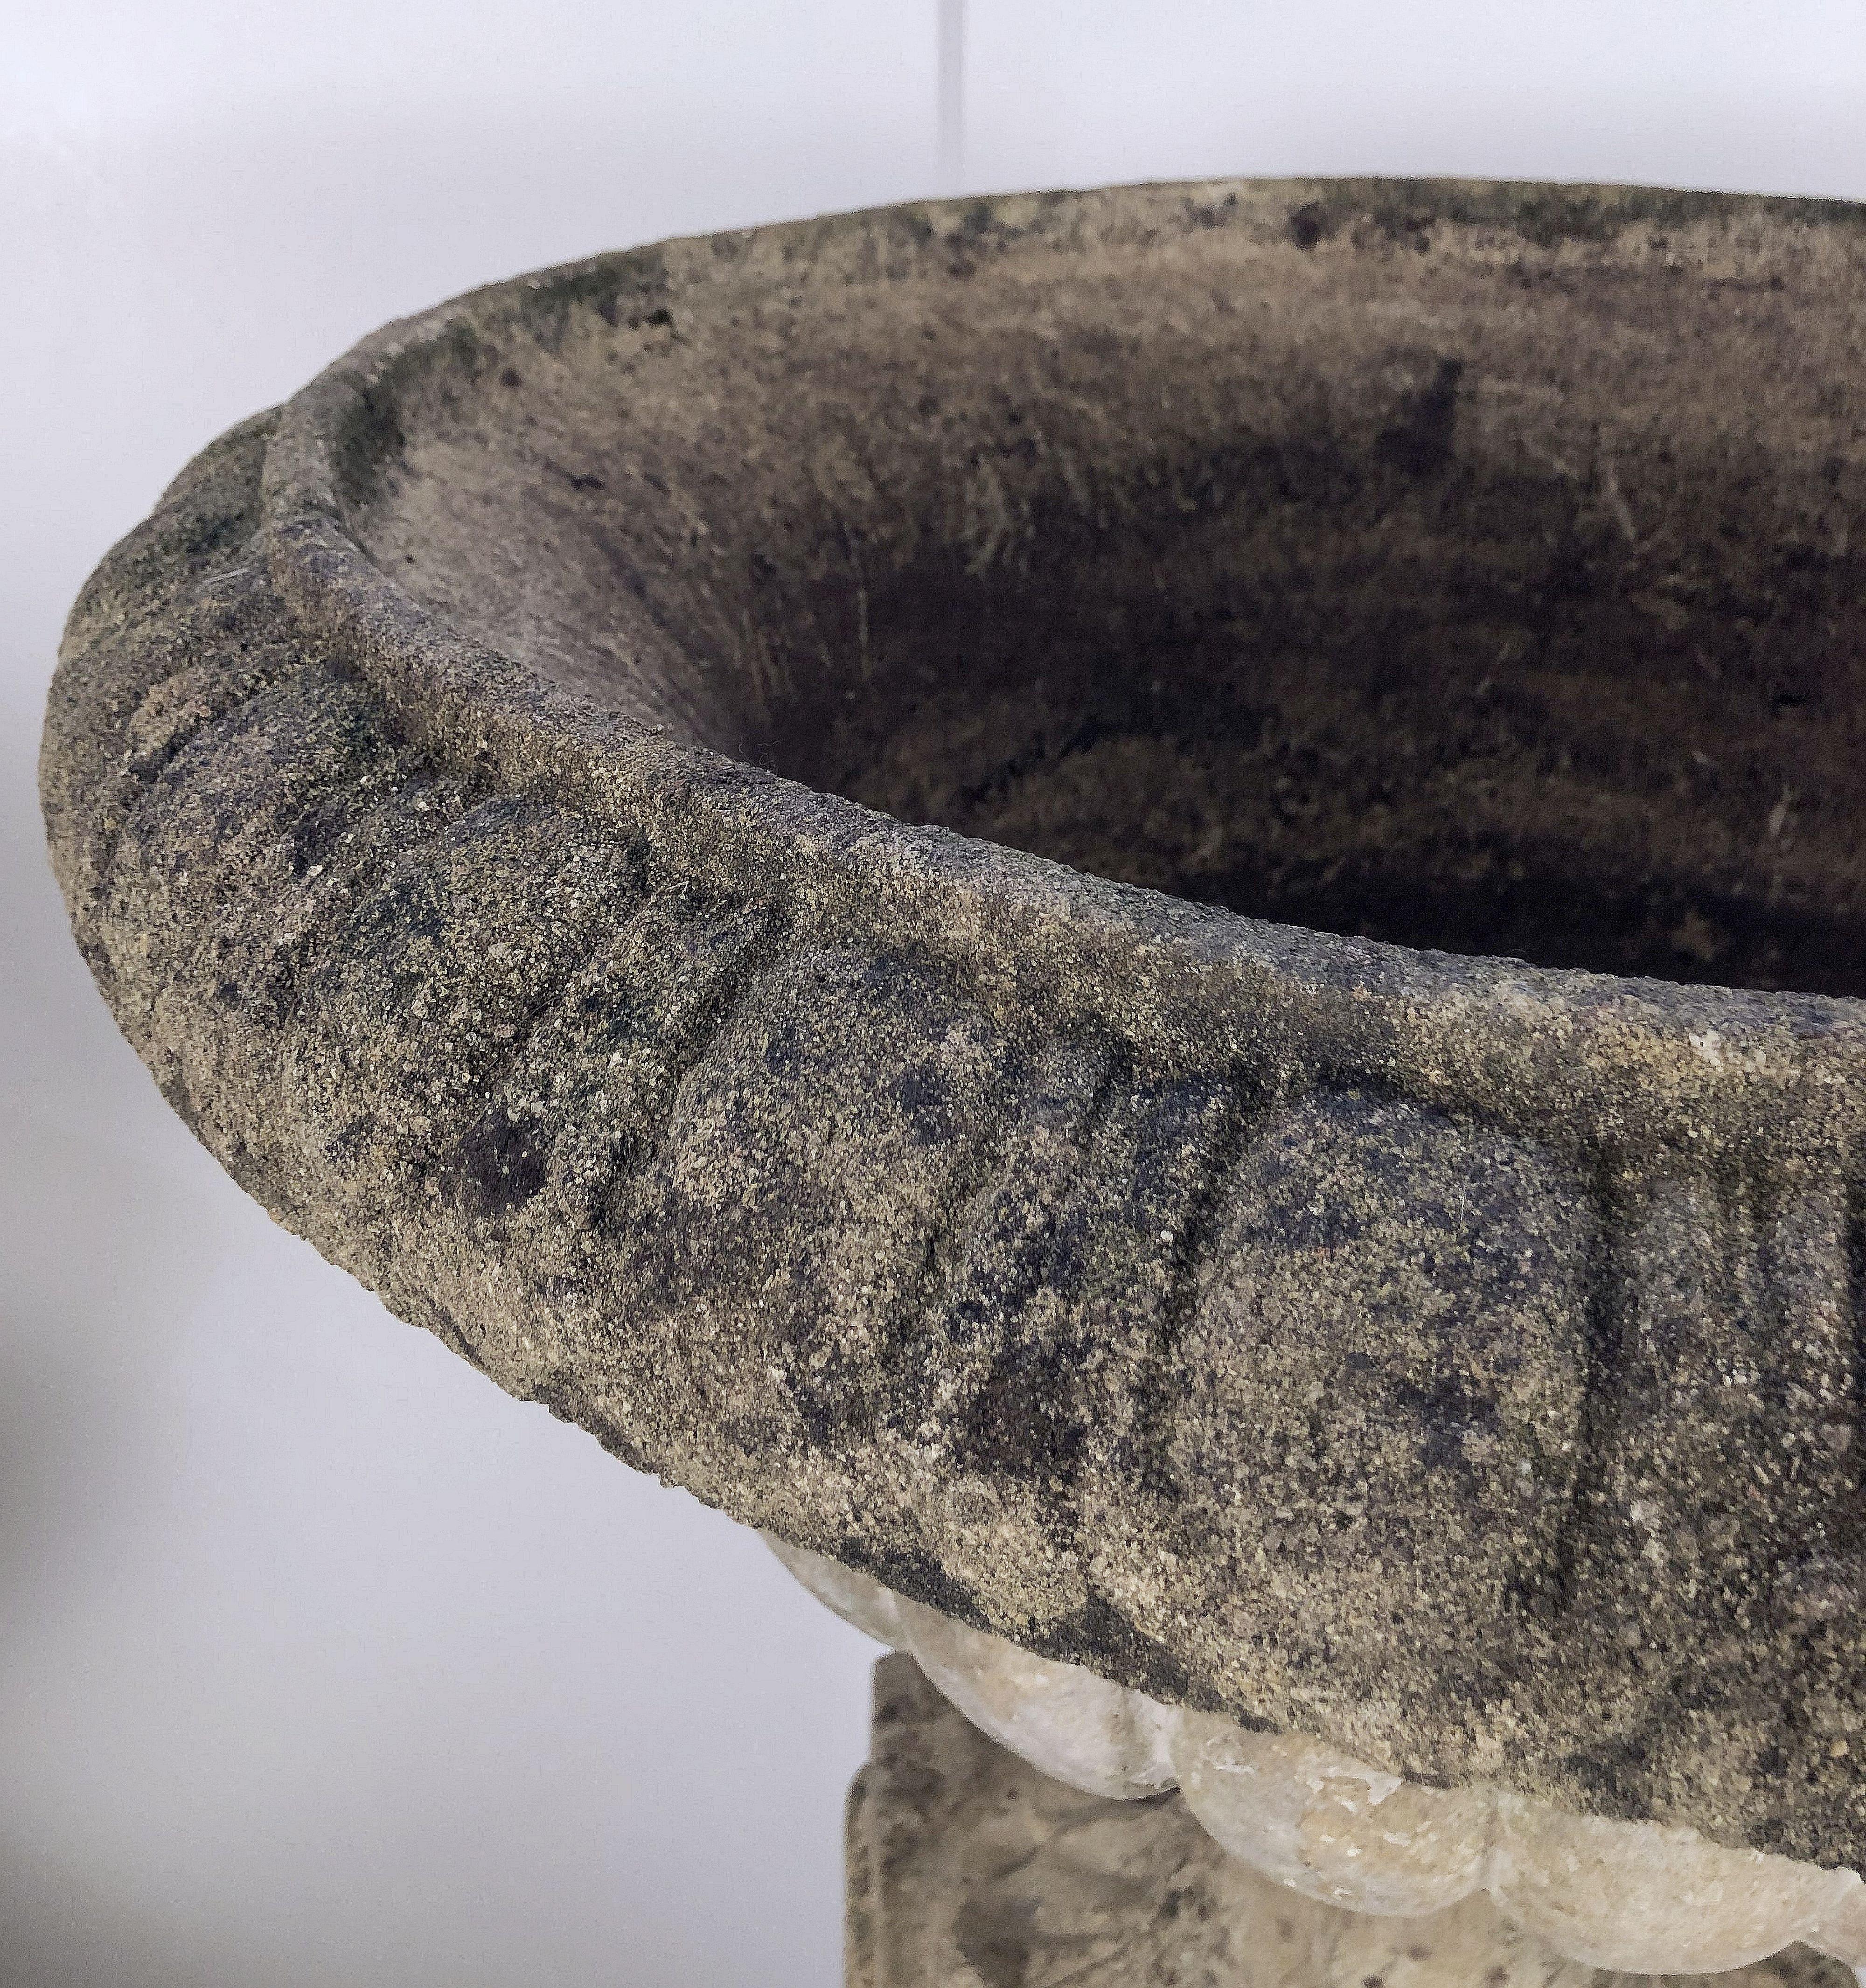 Classical Roman Large English Garden Stone Urn or Planter Pot on Plinth or Pedestal